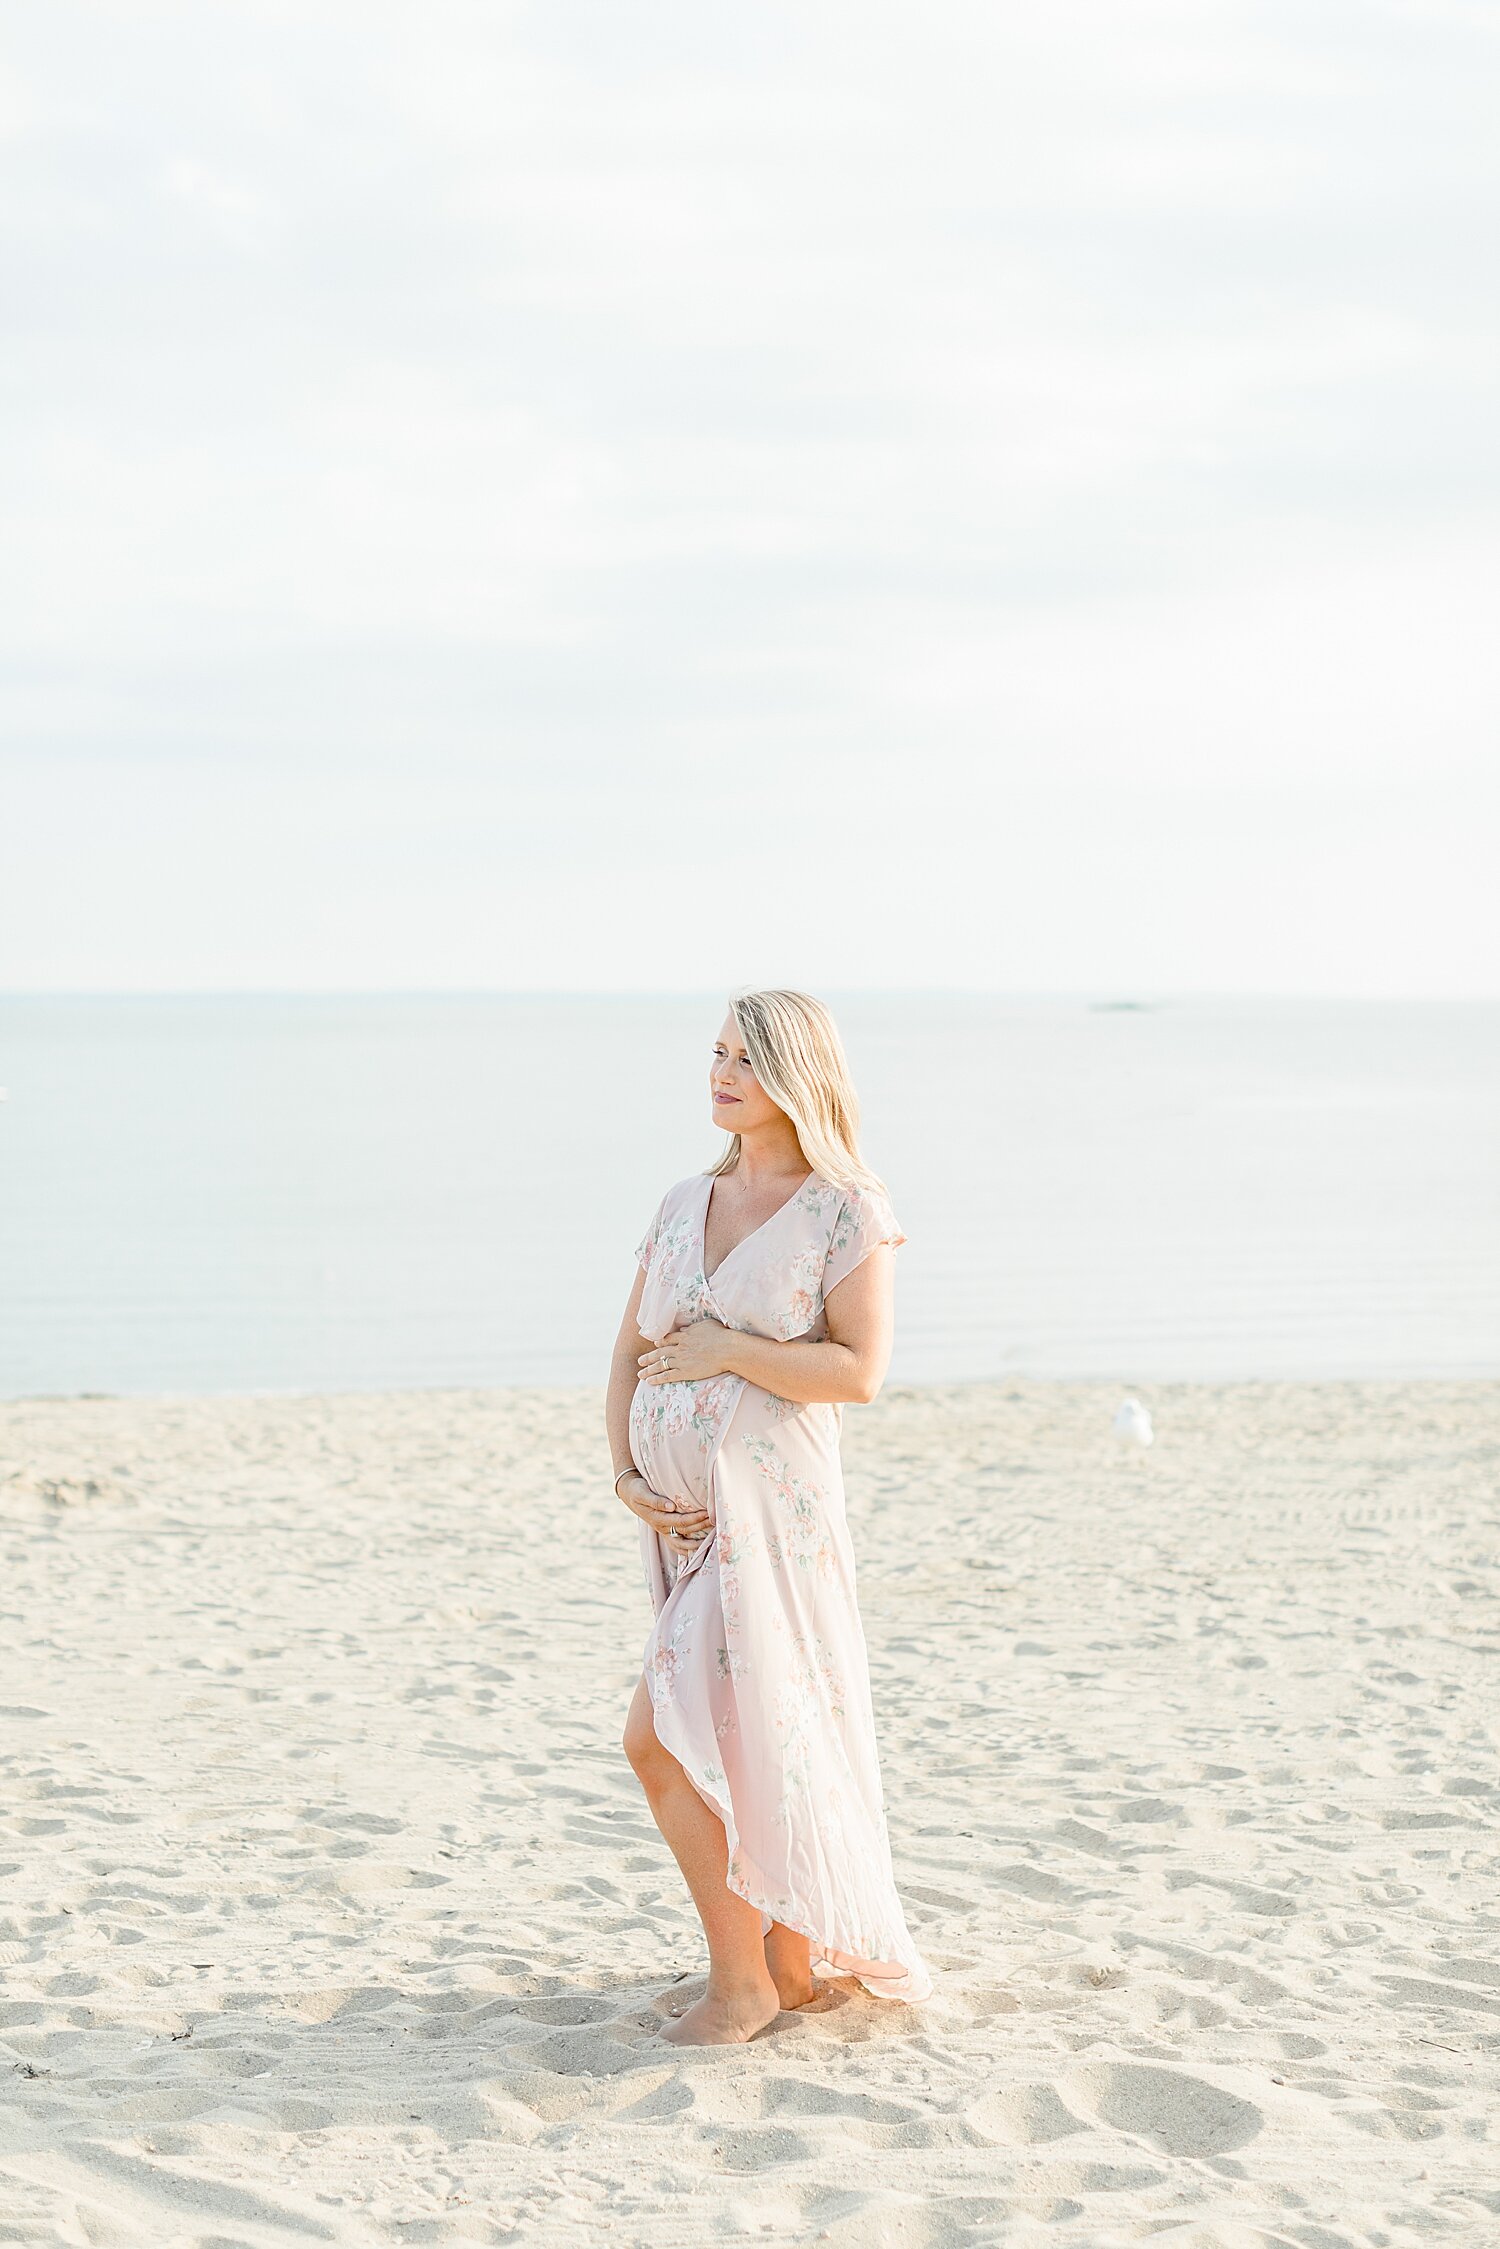 Beach maternity session. Photos taken by Darien Maternity Photographer, Kristin Wood Photography.